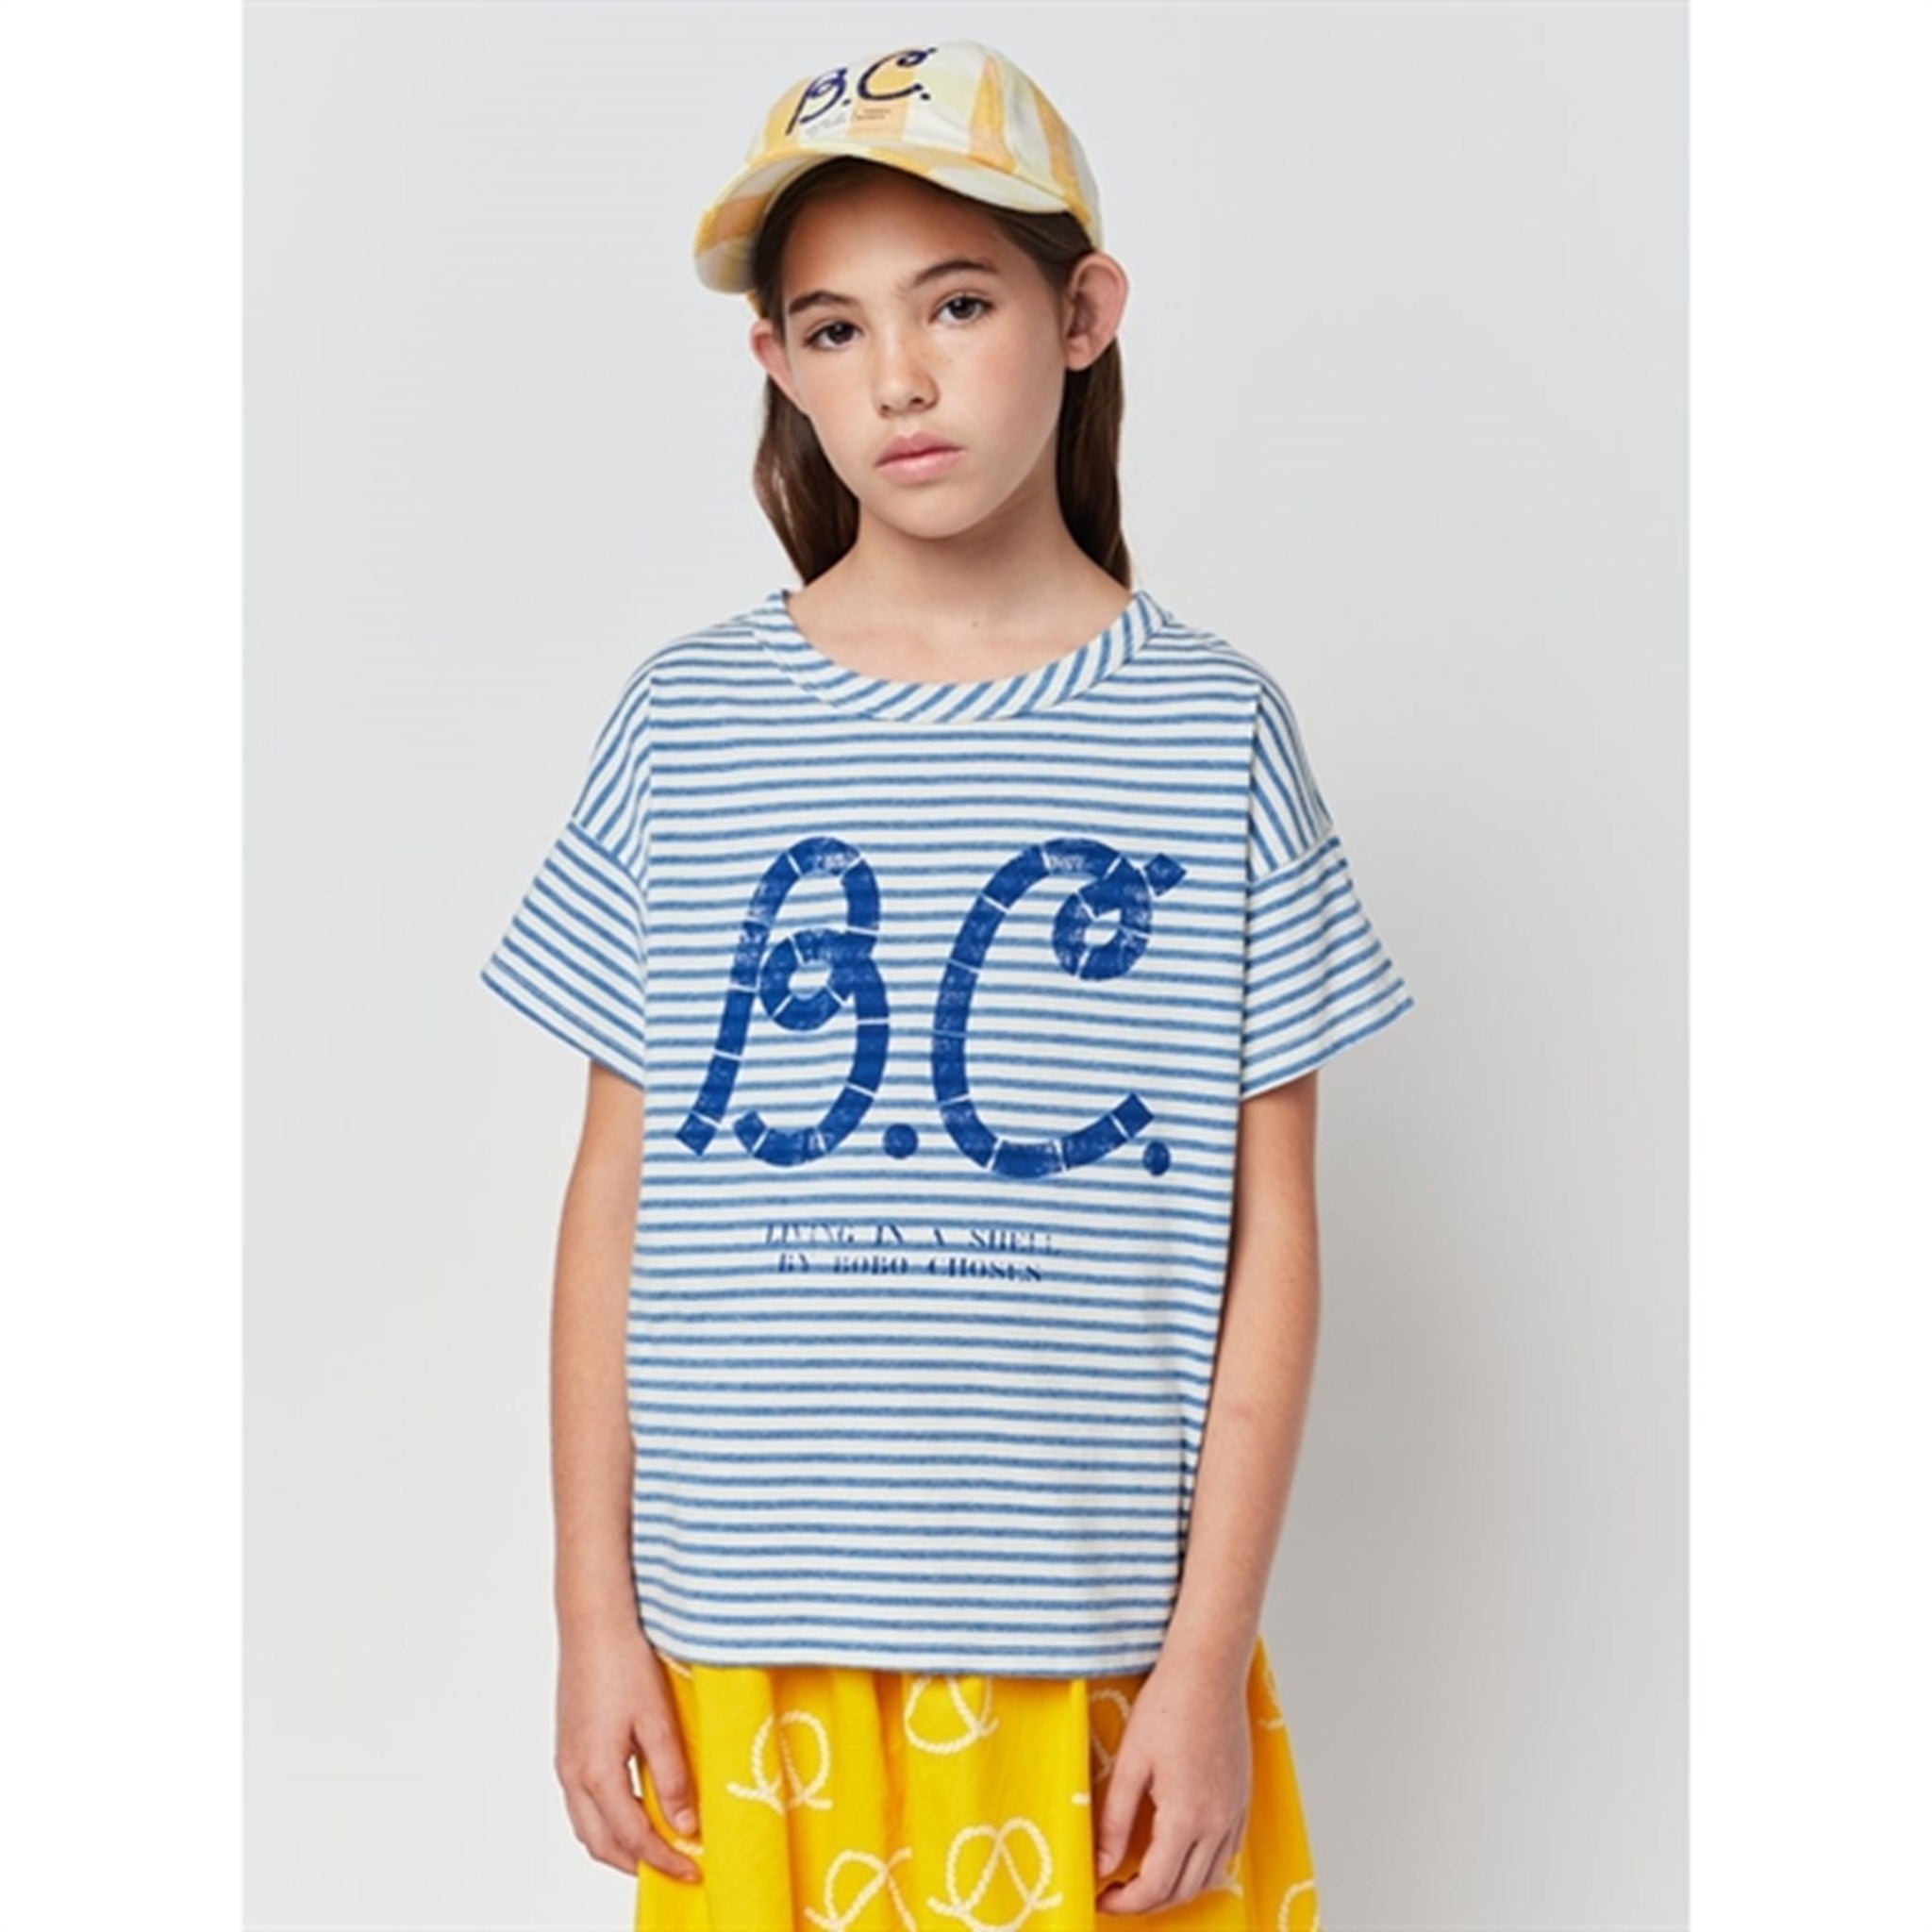 Bobo Choses Light Blue Stripes T-Shirt 6